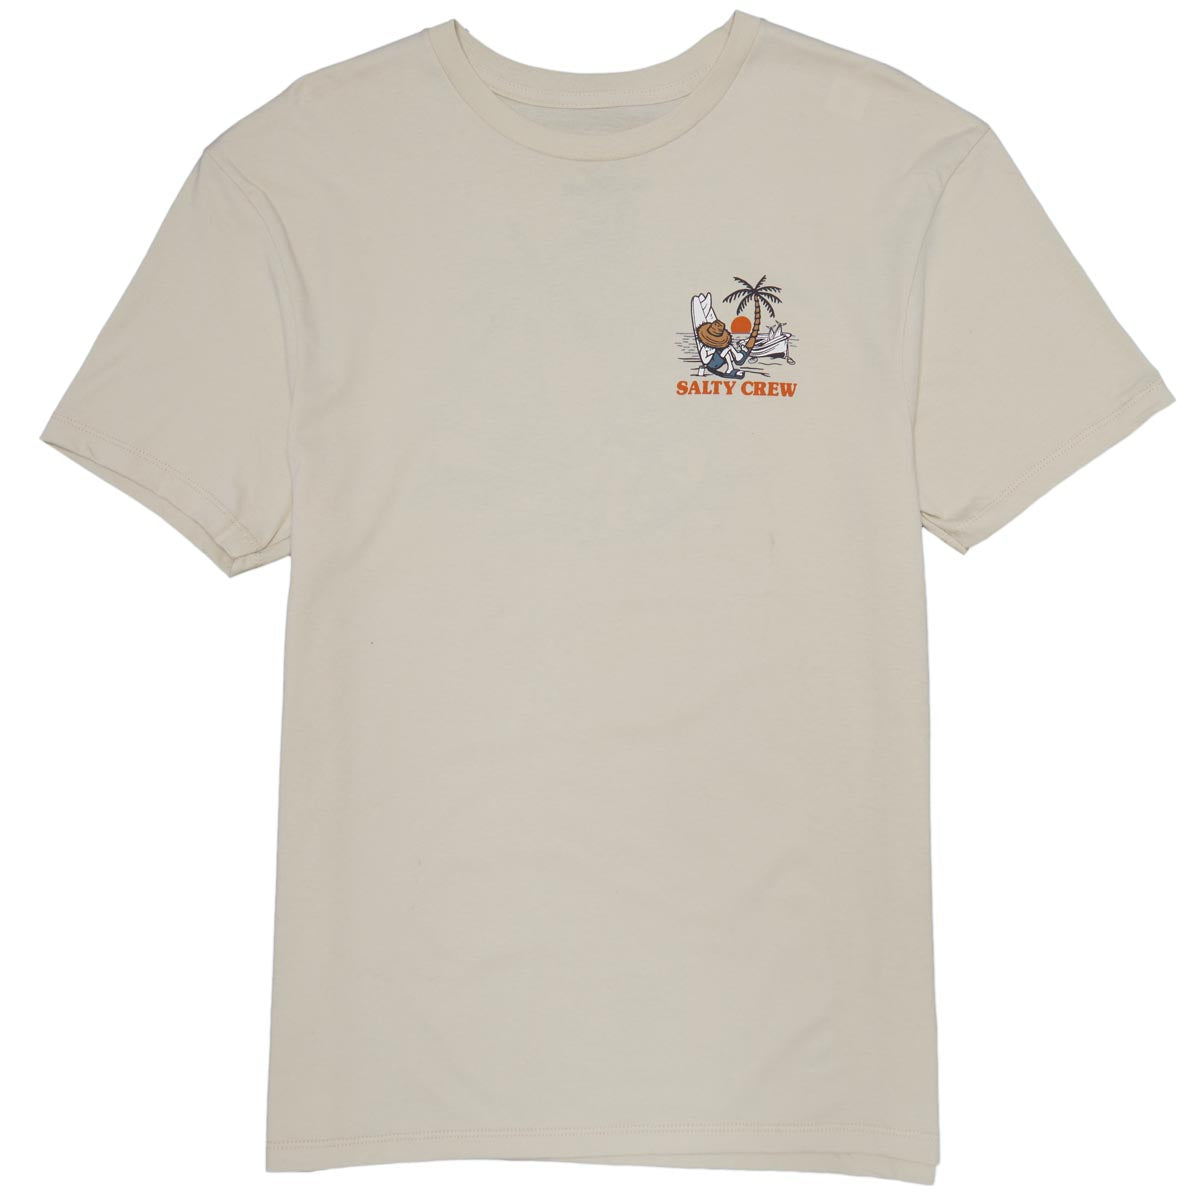 Salty Crew Siesta Premium T-Shirt - Bone image 2